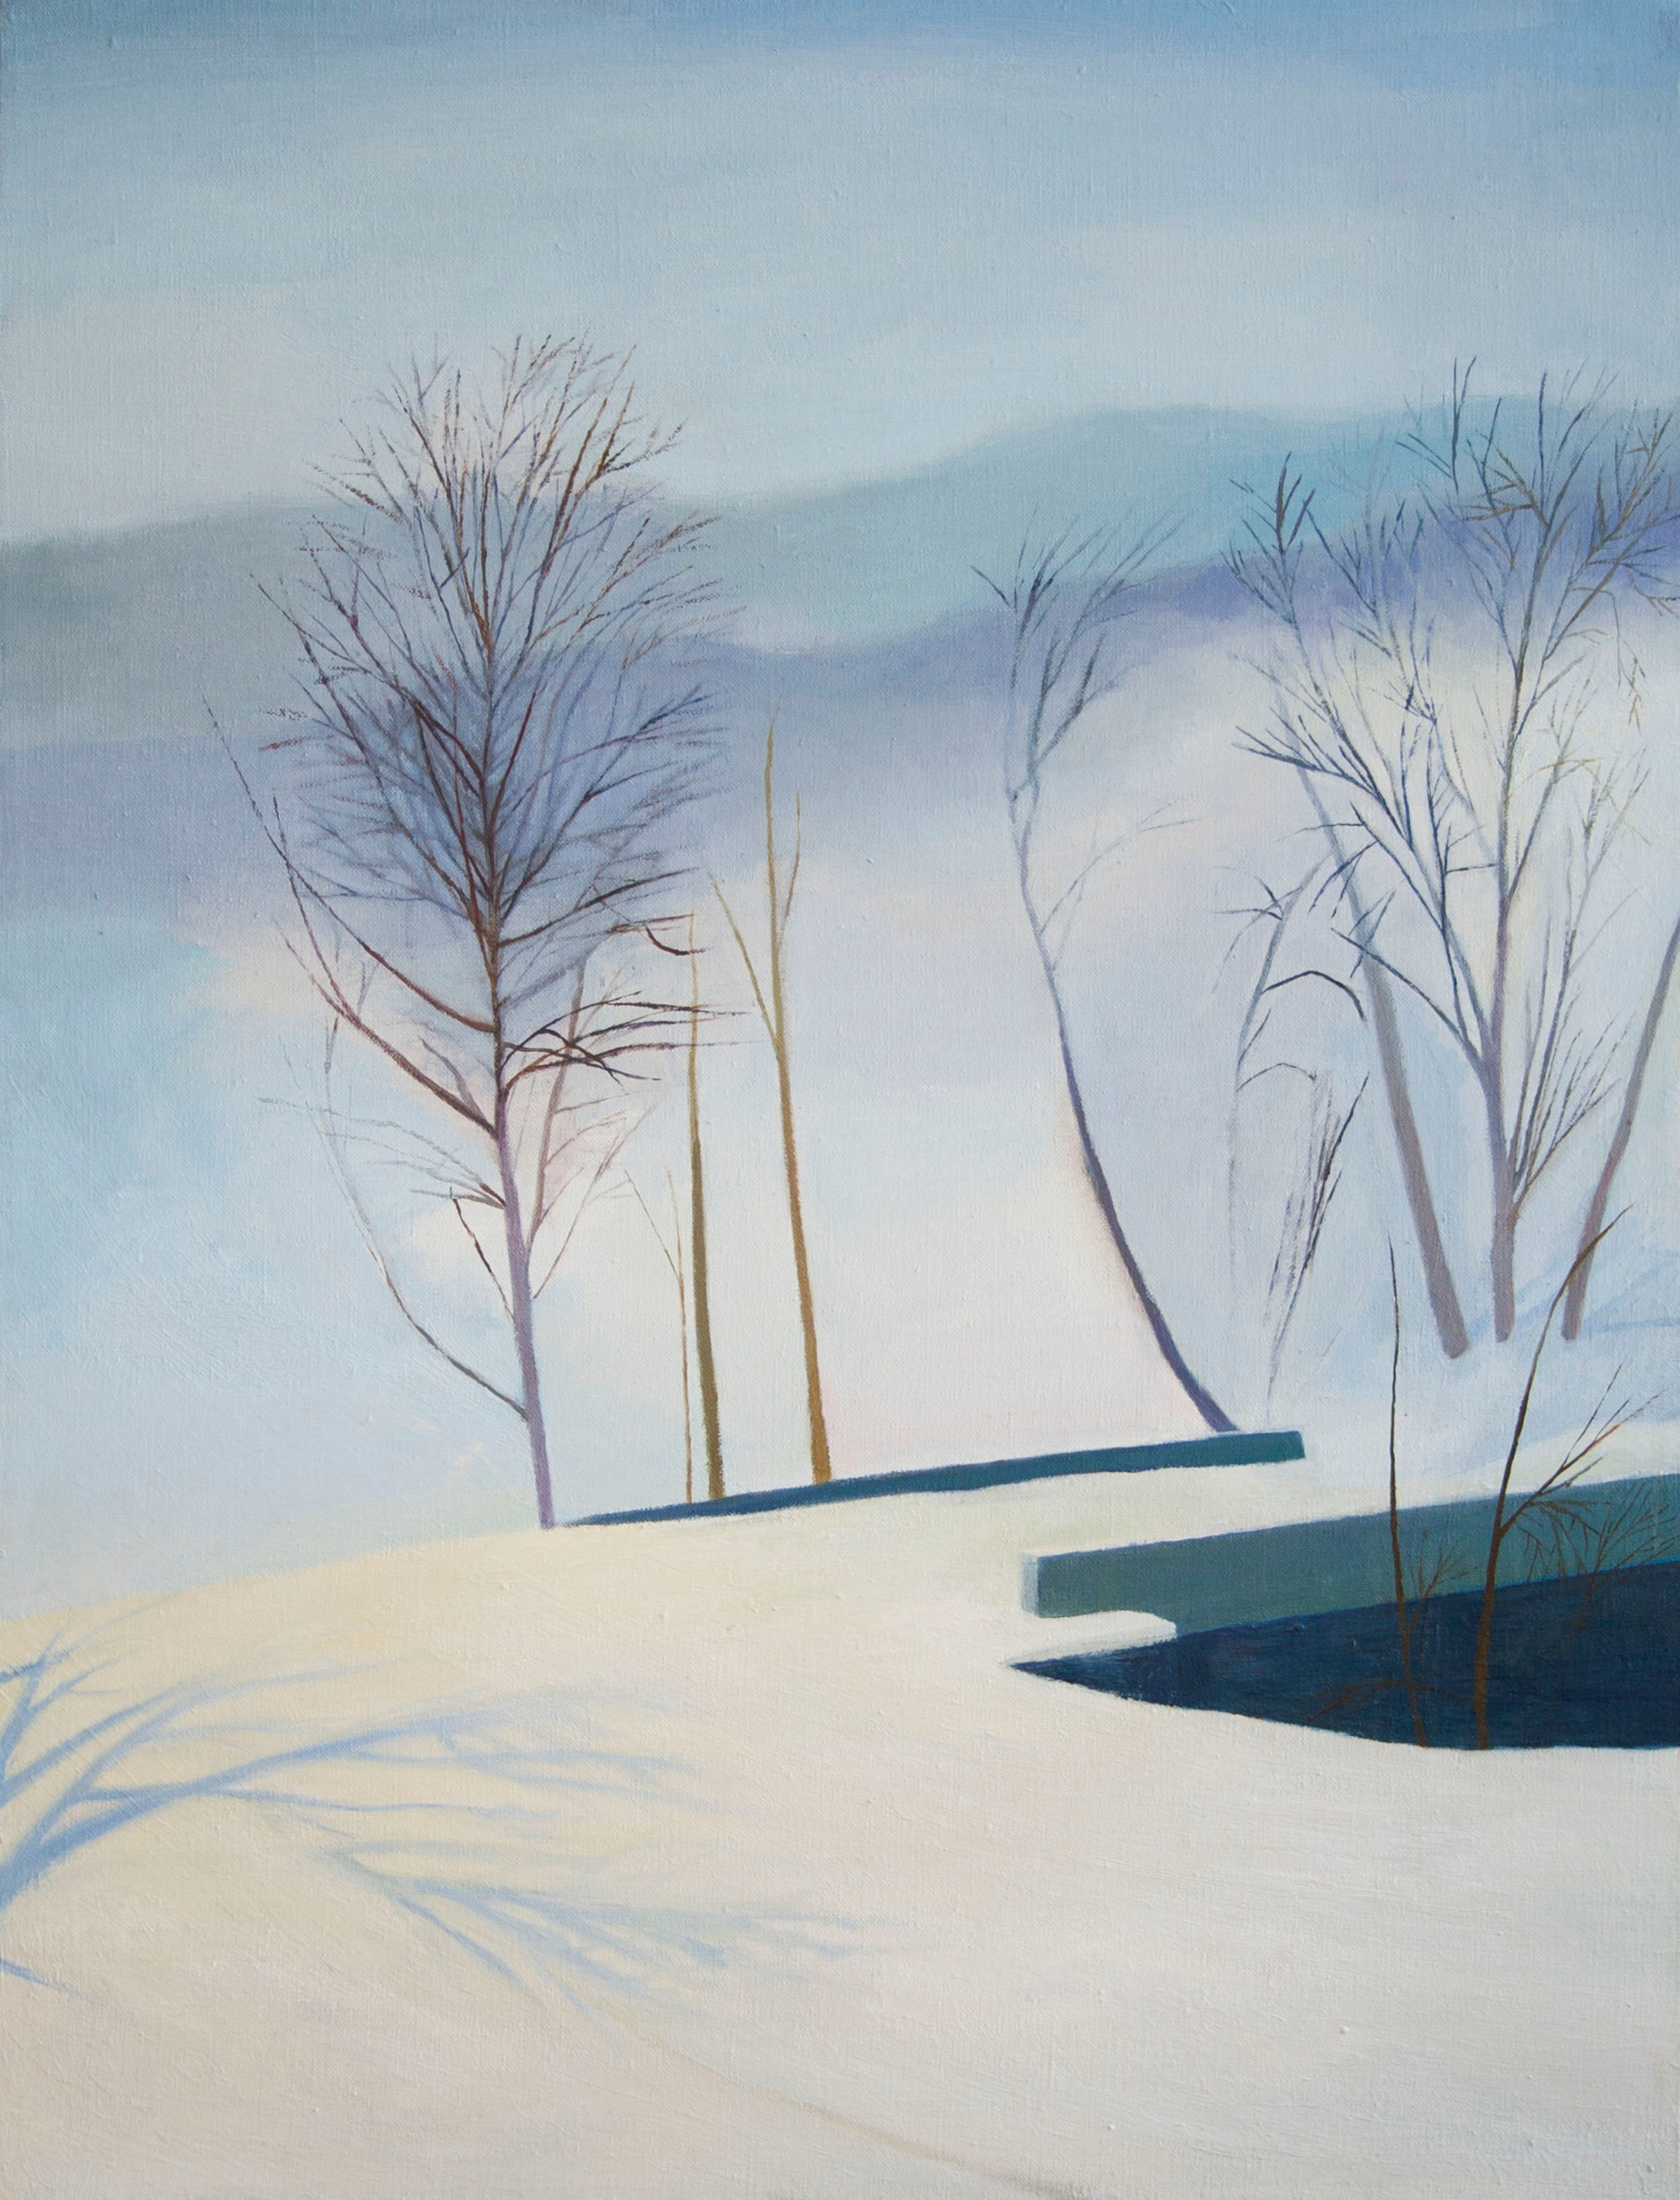 Snow Scene, Oil on linen, 24 x 18 inches, 2015